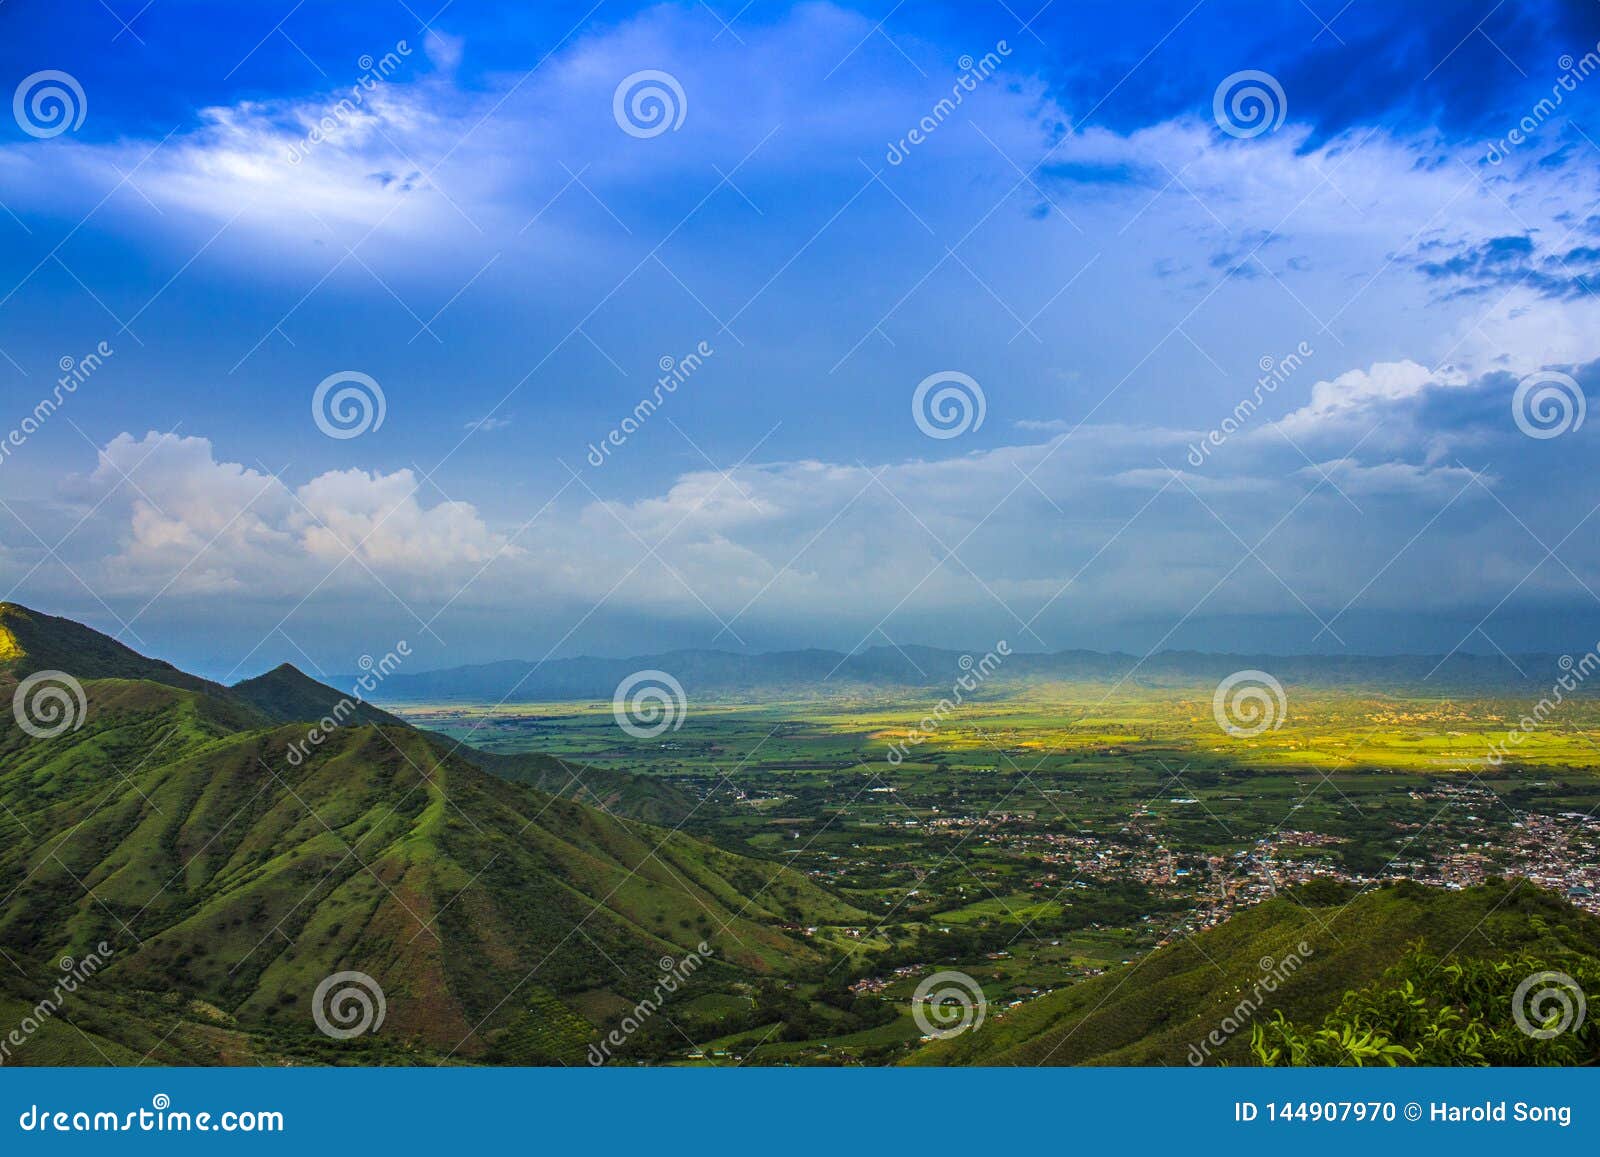 landscape of of colombia, valle del cauca.